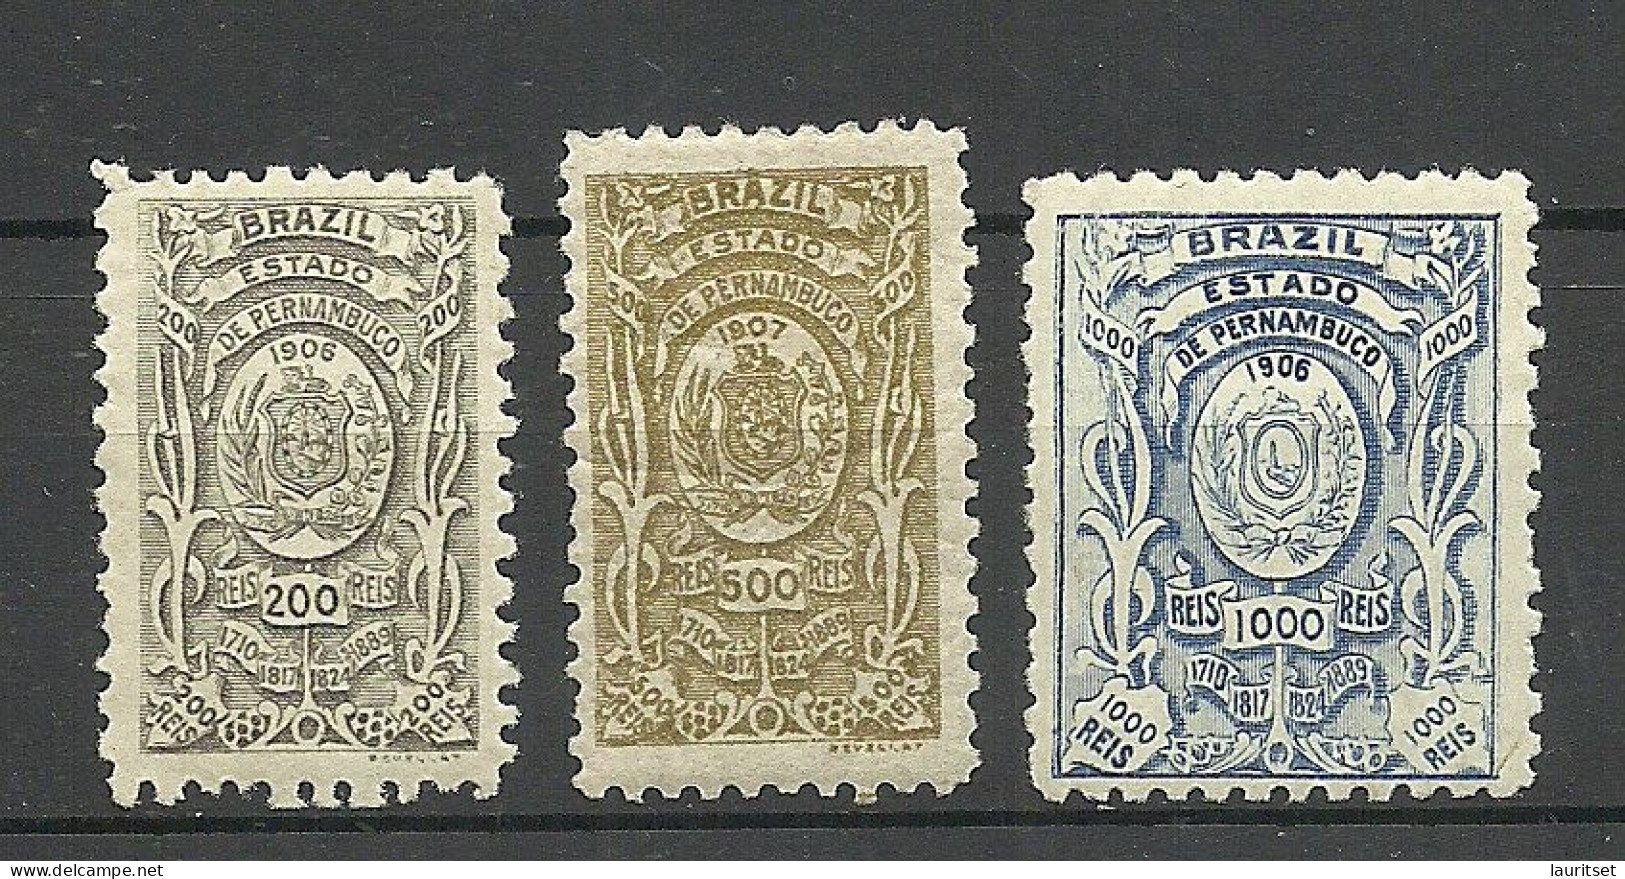 BRAZIL Brazilia Estado De Pernambuco 1898 Local Revenue Taxe Fiscal Tax, 3 Stamps, MNH/MH - Neufs